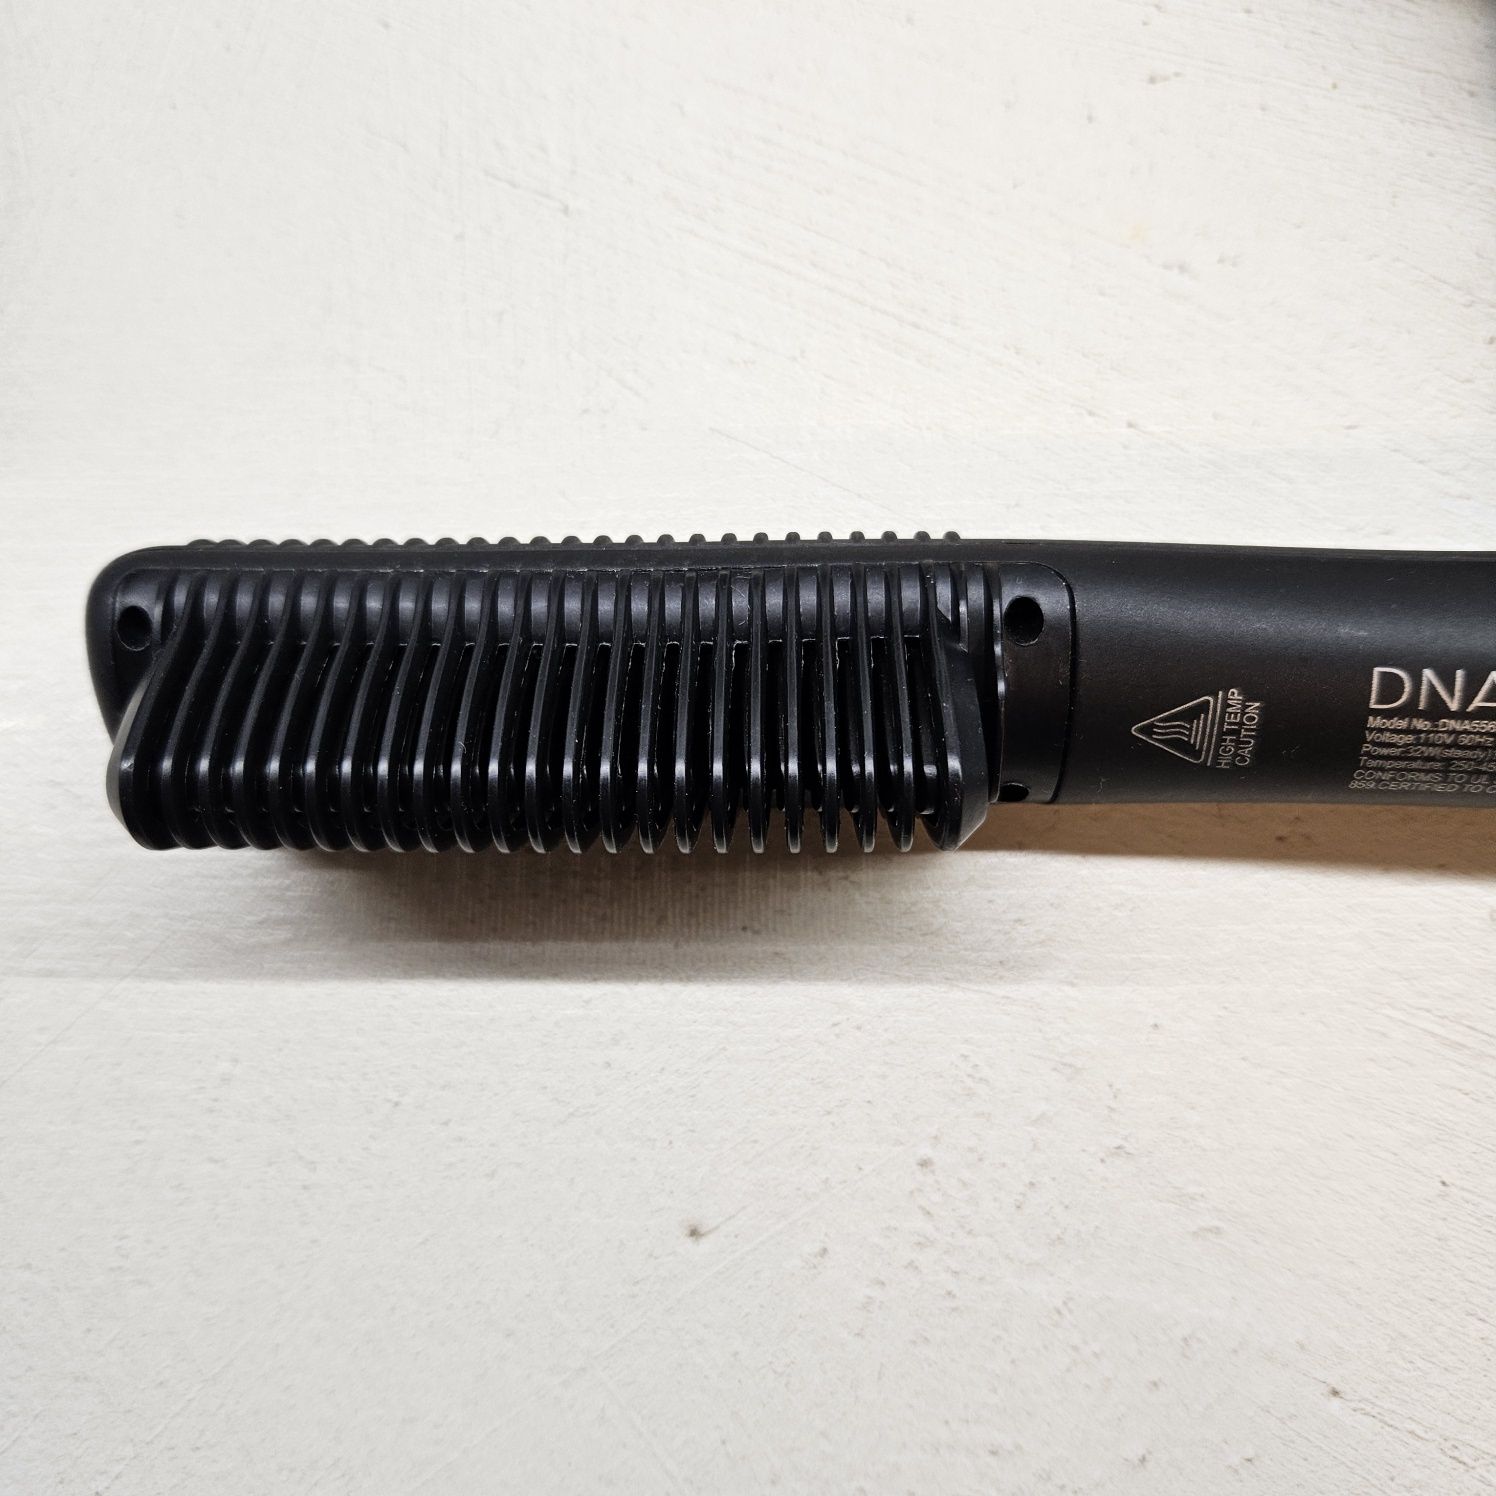 Утюжок DNA Comb оригінал